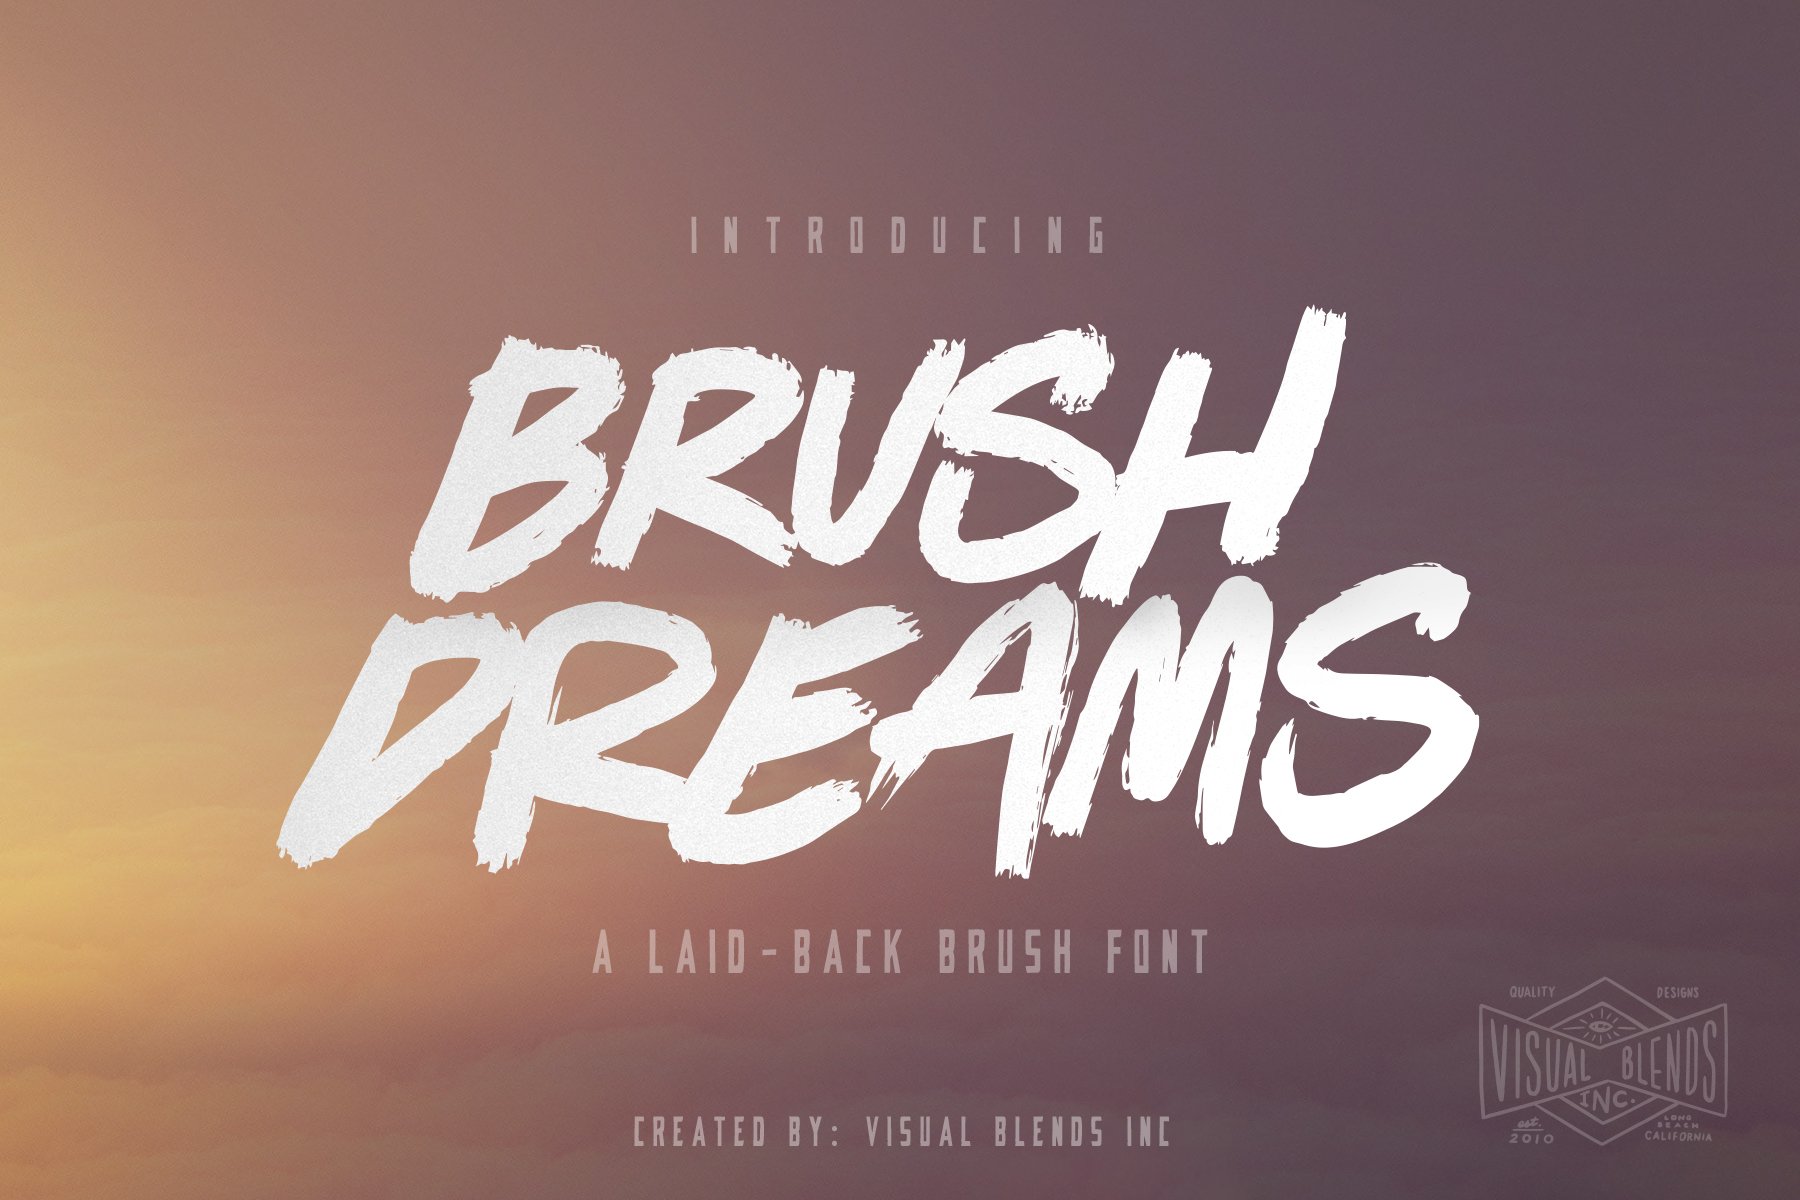 Brush Dreams cover image.